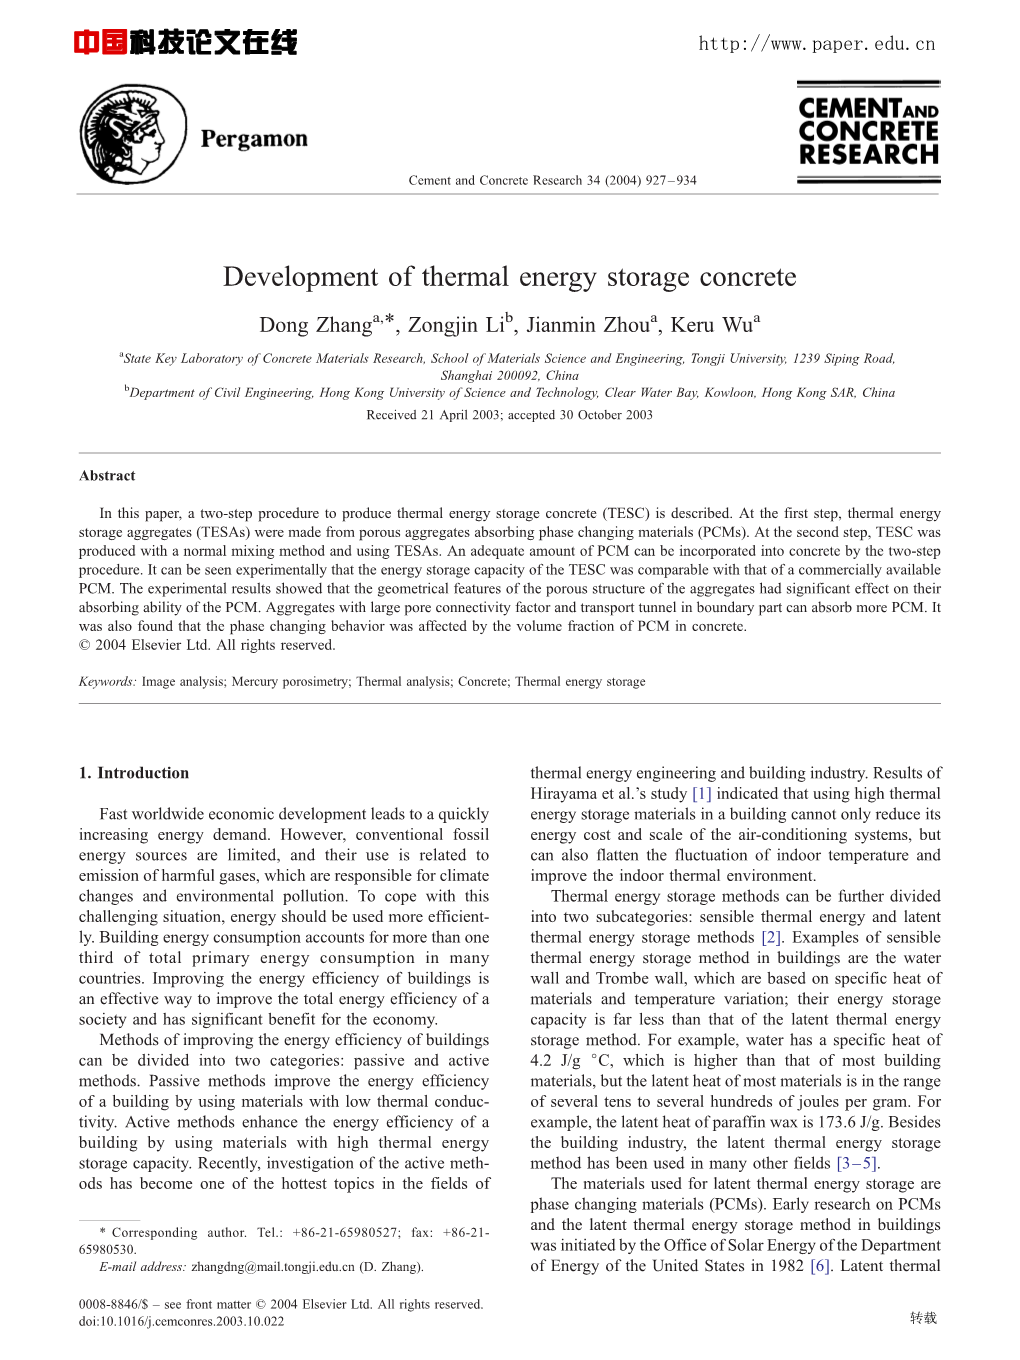 Development of Thermal Energy Storage Concrete